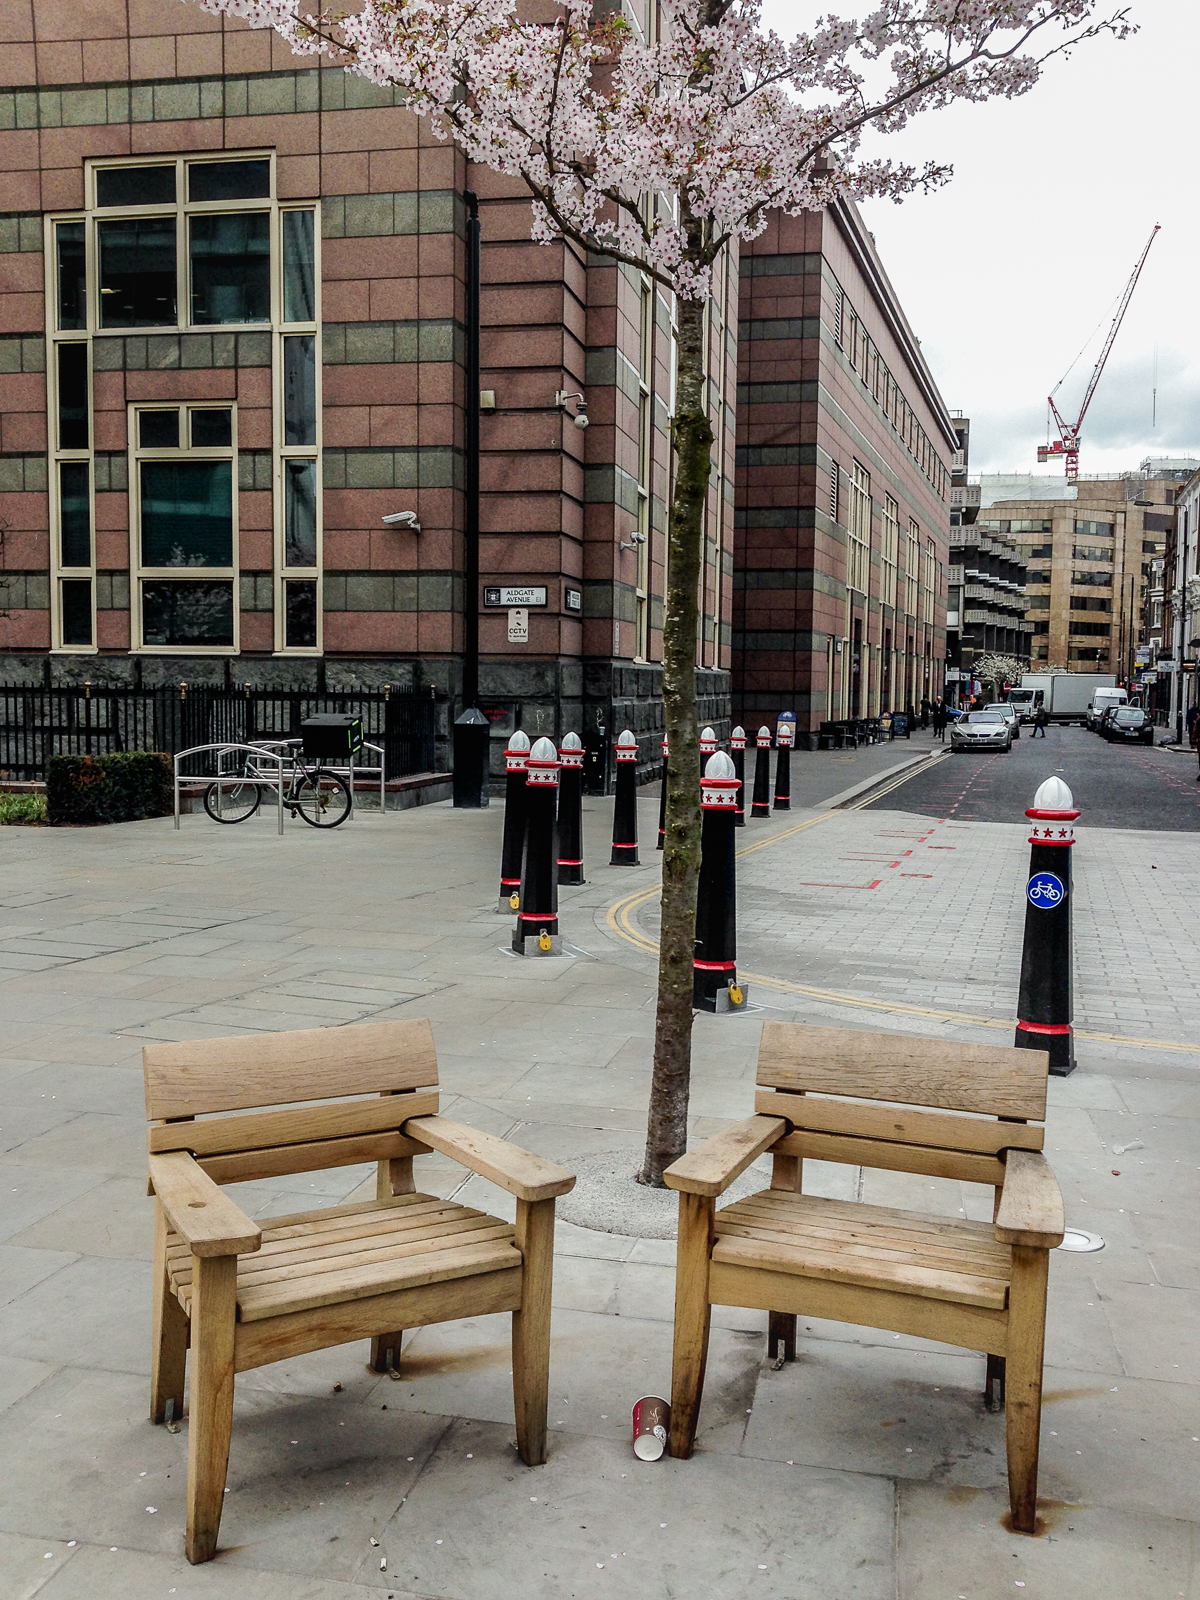 20170317_City-of-London_Saint-Botolph-Street_Chairs-under-the-Cherry-Tree